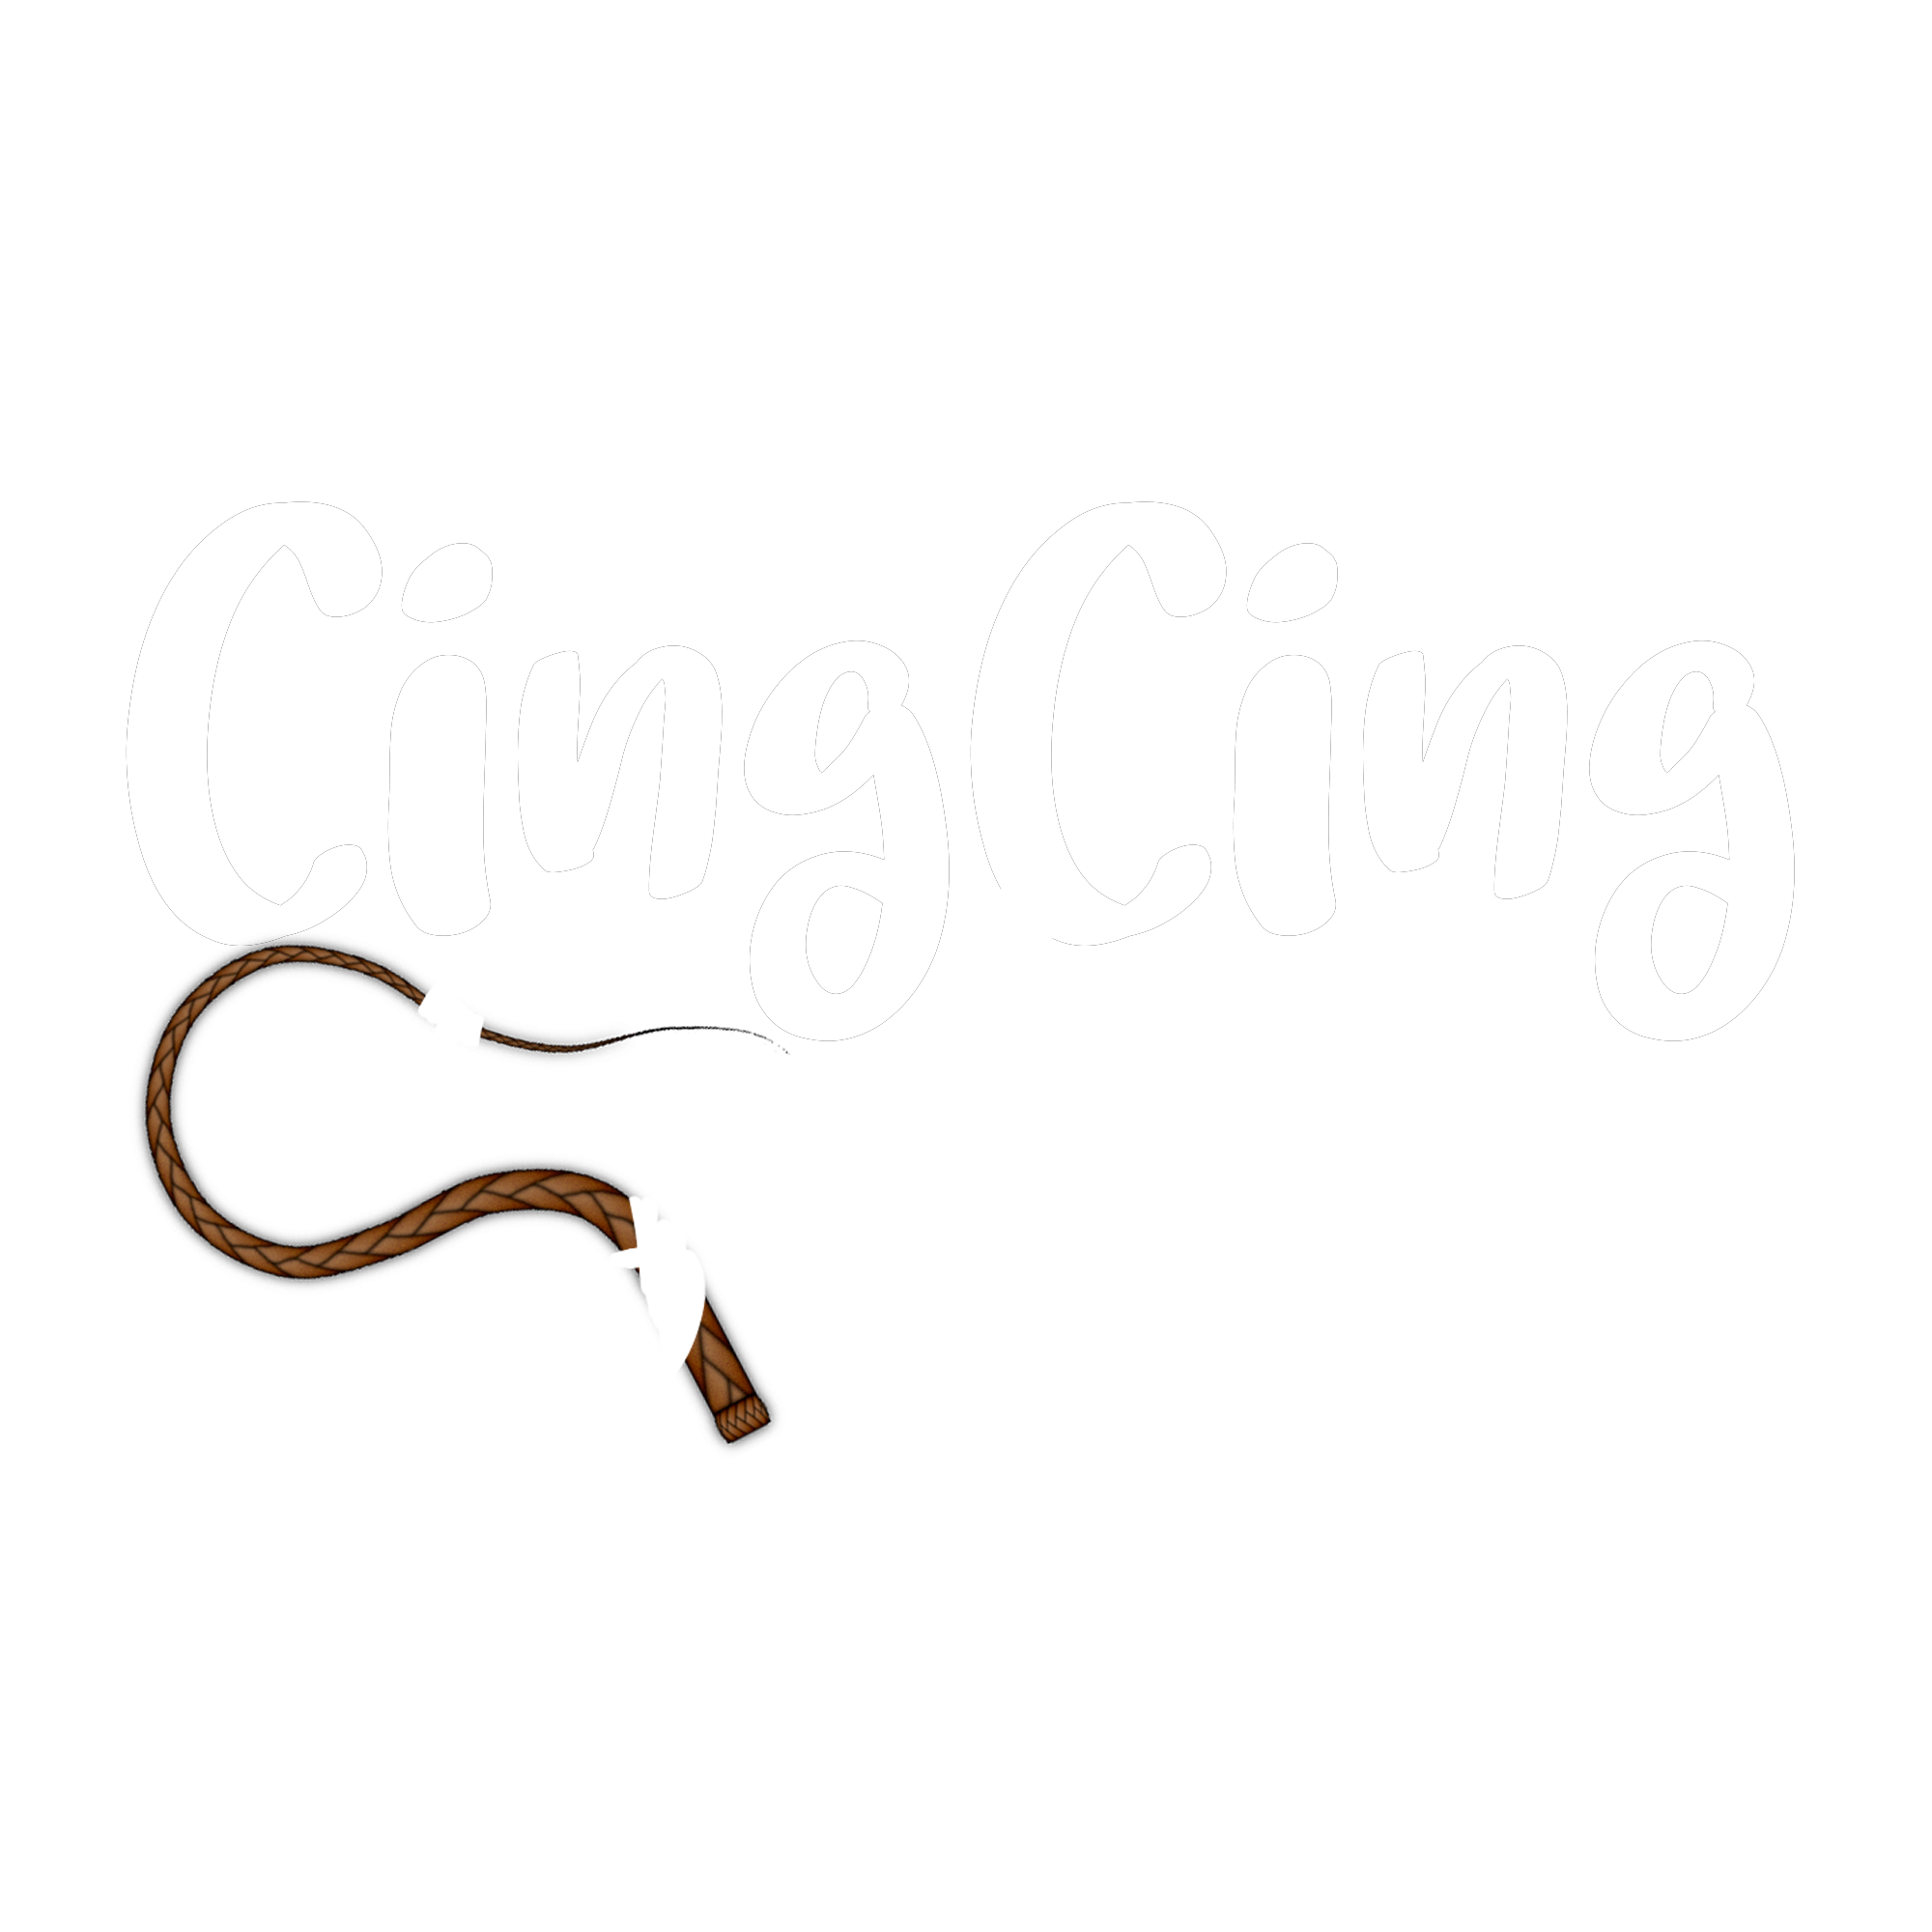 Cing Cing Goling